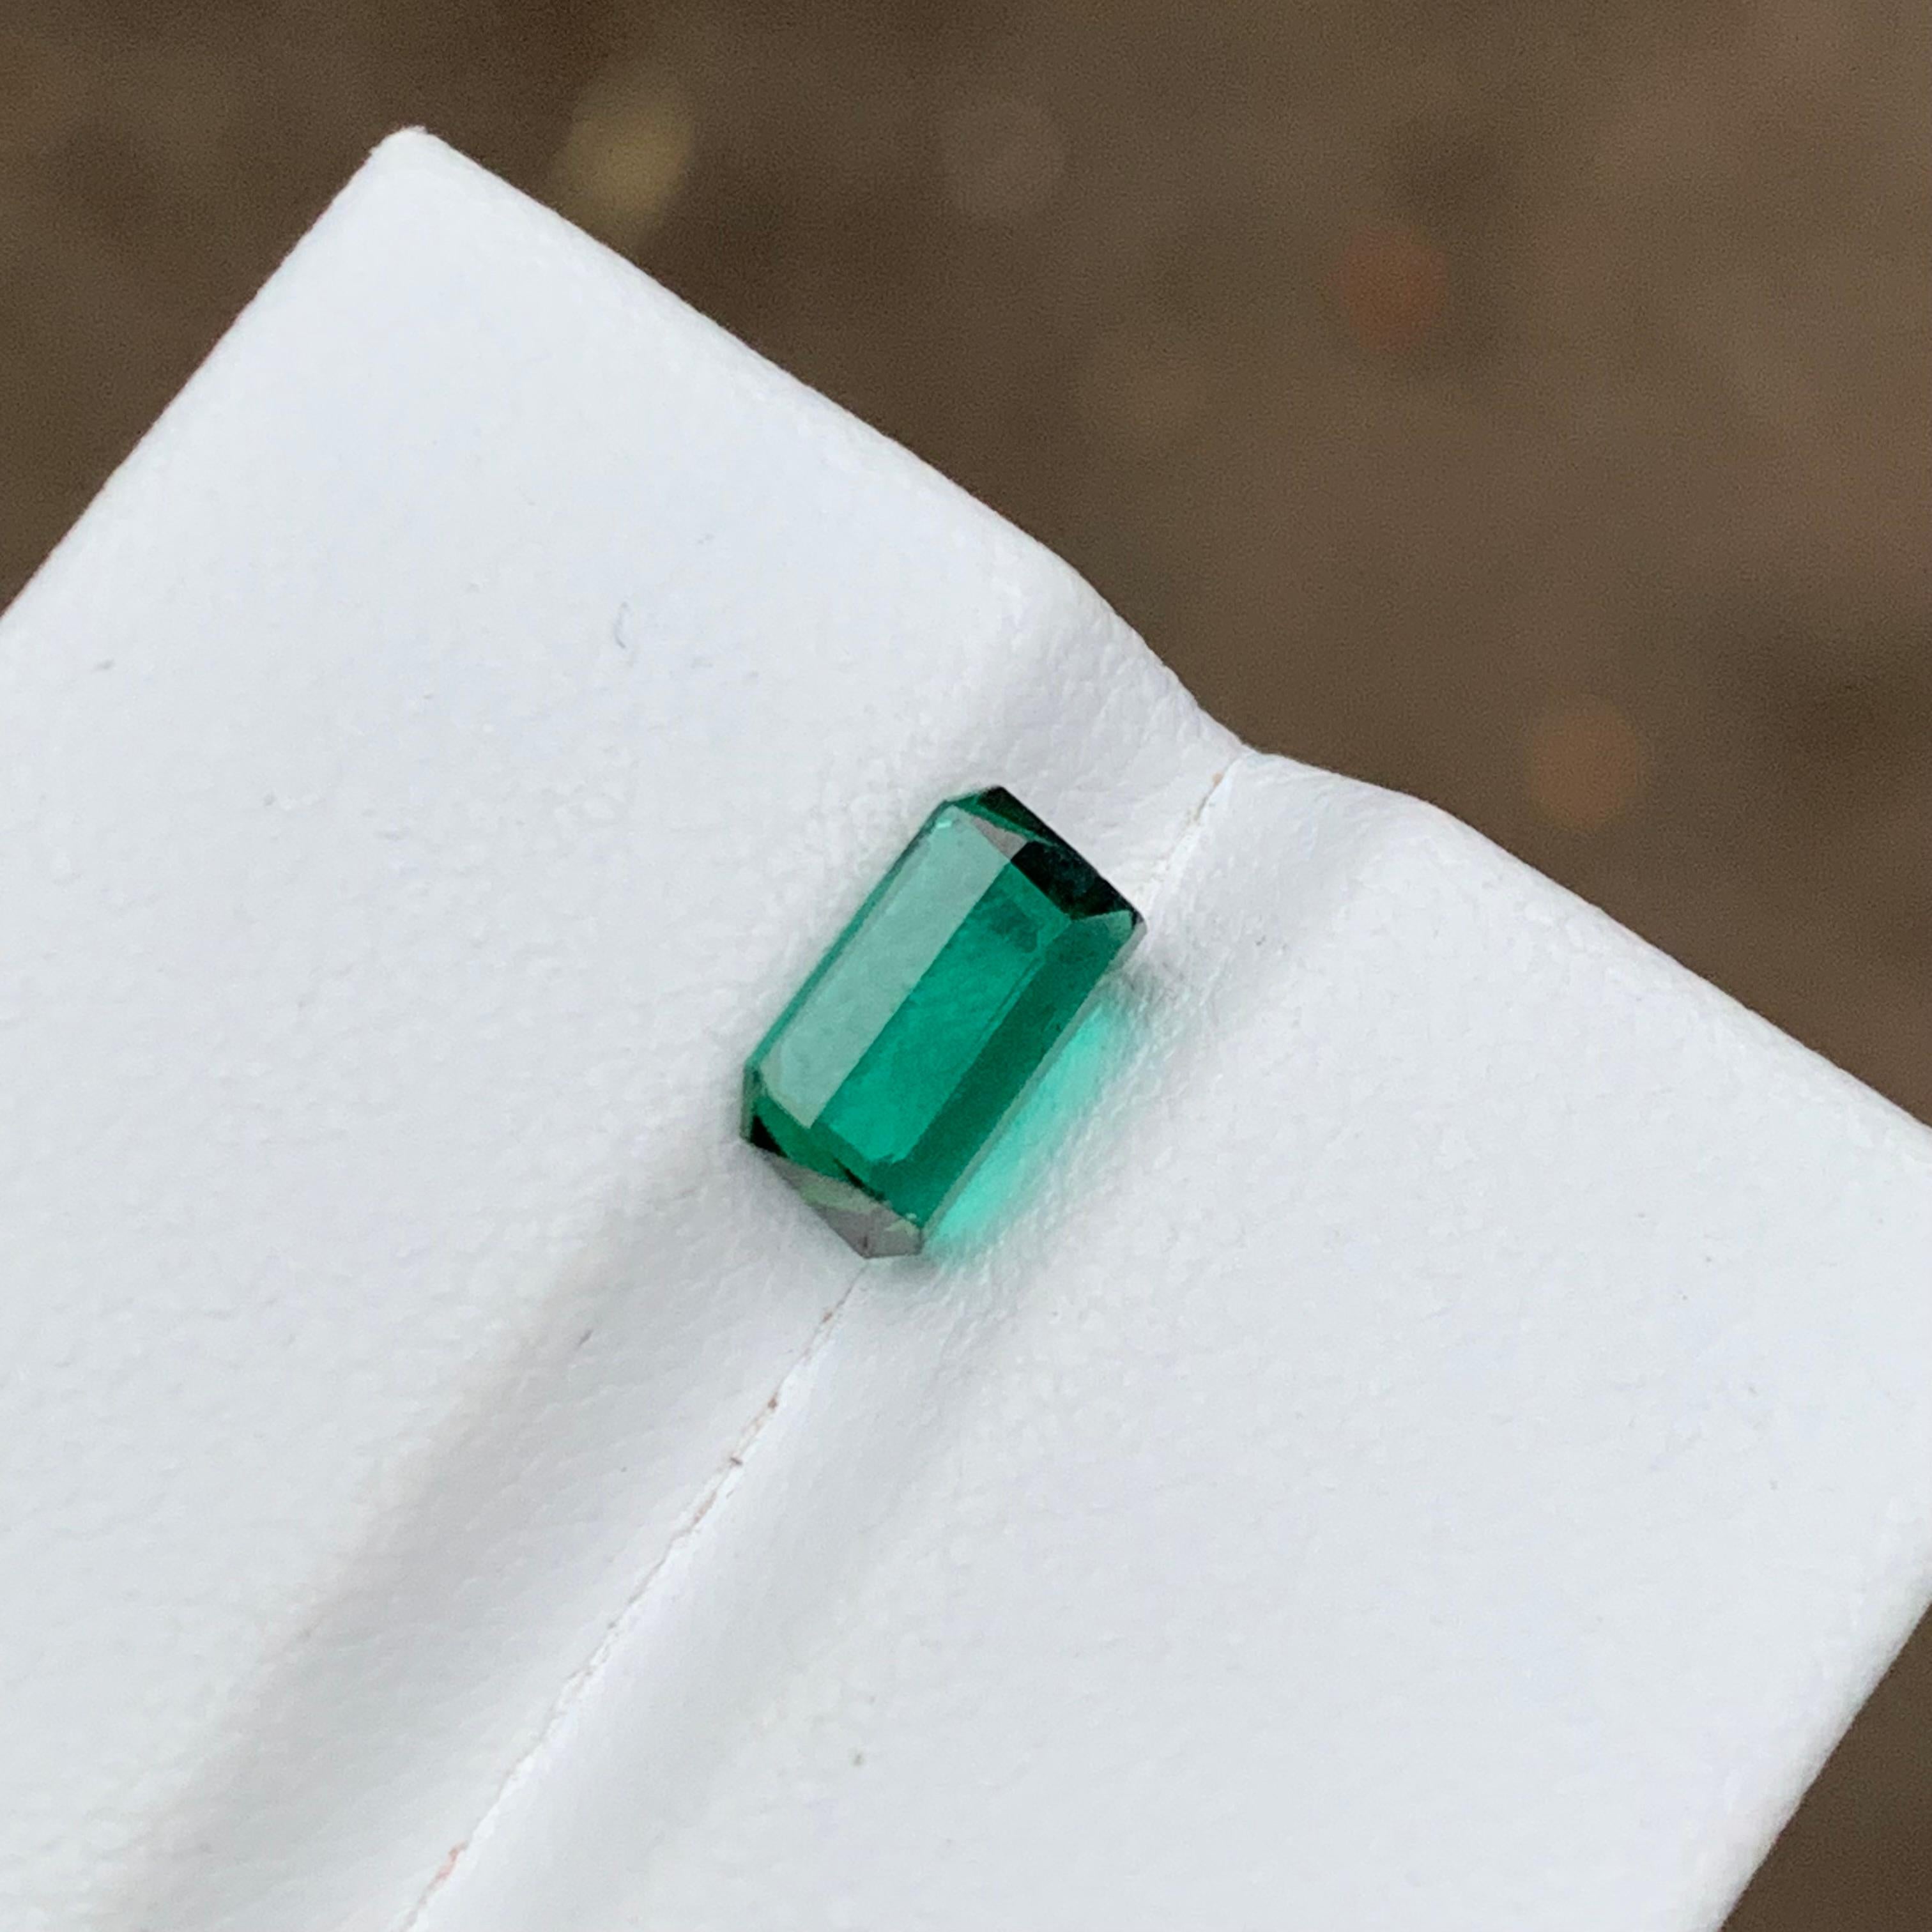 Rare Vibrant Bluish Neon Green Tourmaline Gemstone, 1.35 Ct Emerald Cut for Ring For Sale 1